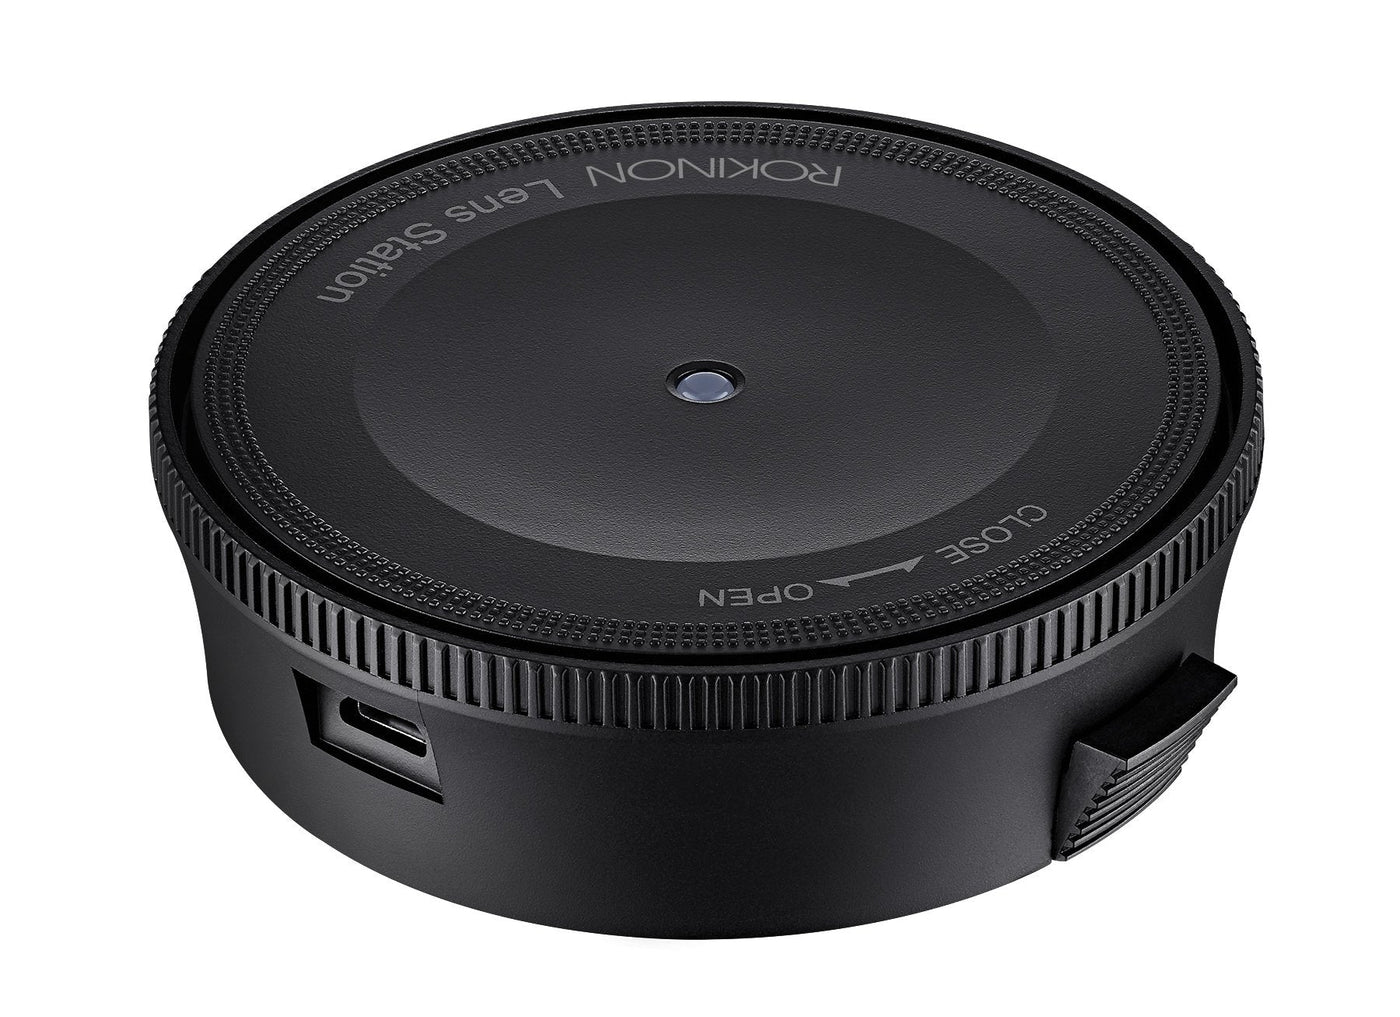 Lens Station for Rokinon Auto Focus Lenses (Nikon F) - Rokinon Lenses - IOLS-N